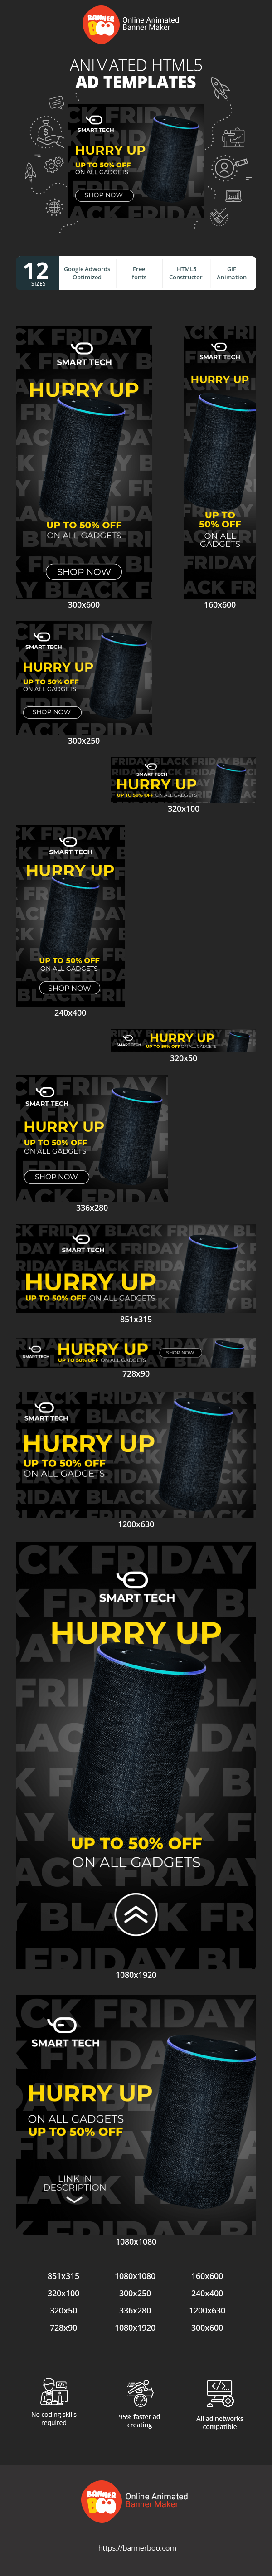 Шаблон рекламного банера — Black Friday Hurry Up — Up To 50% Off On All Gadgets